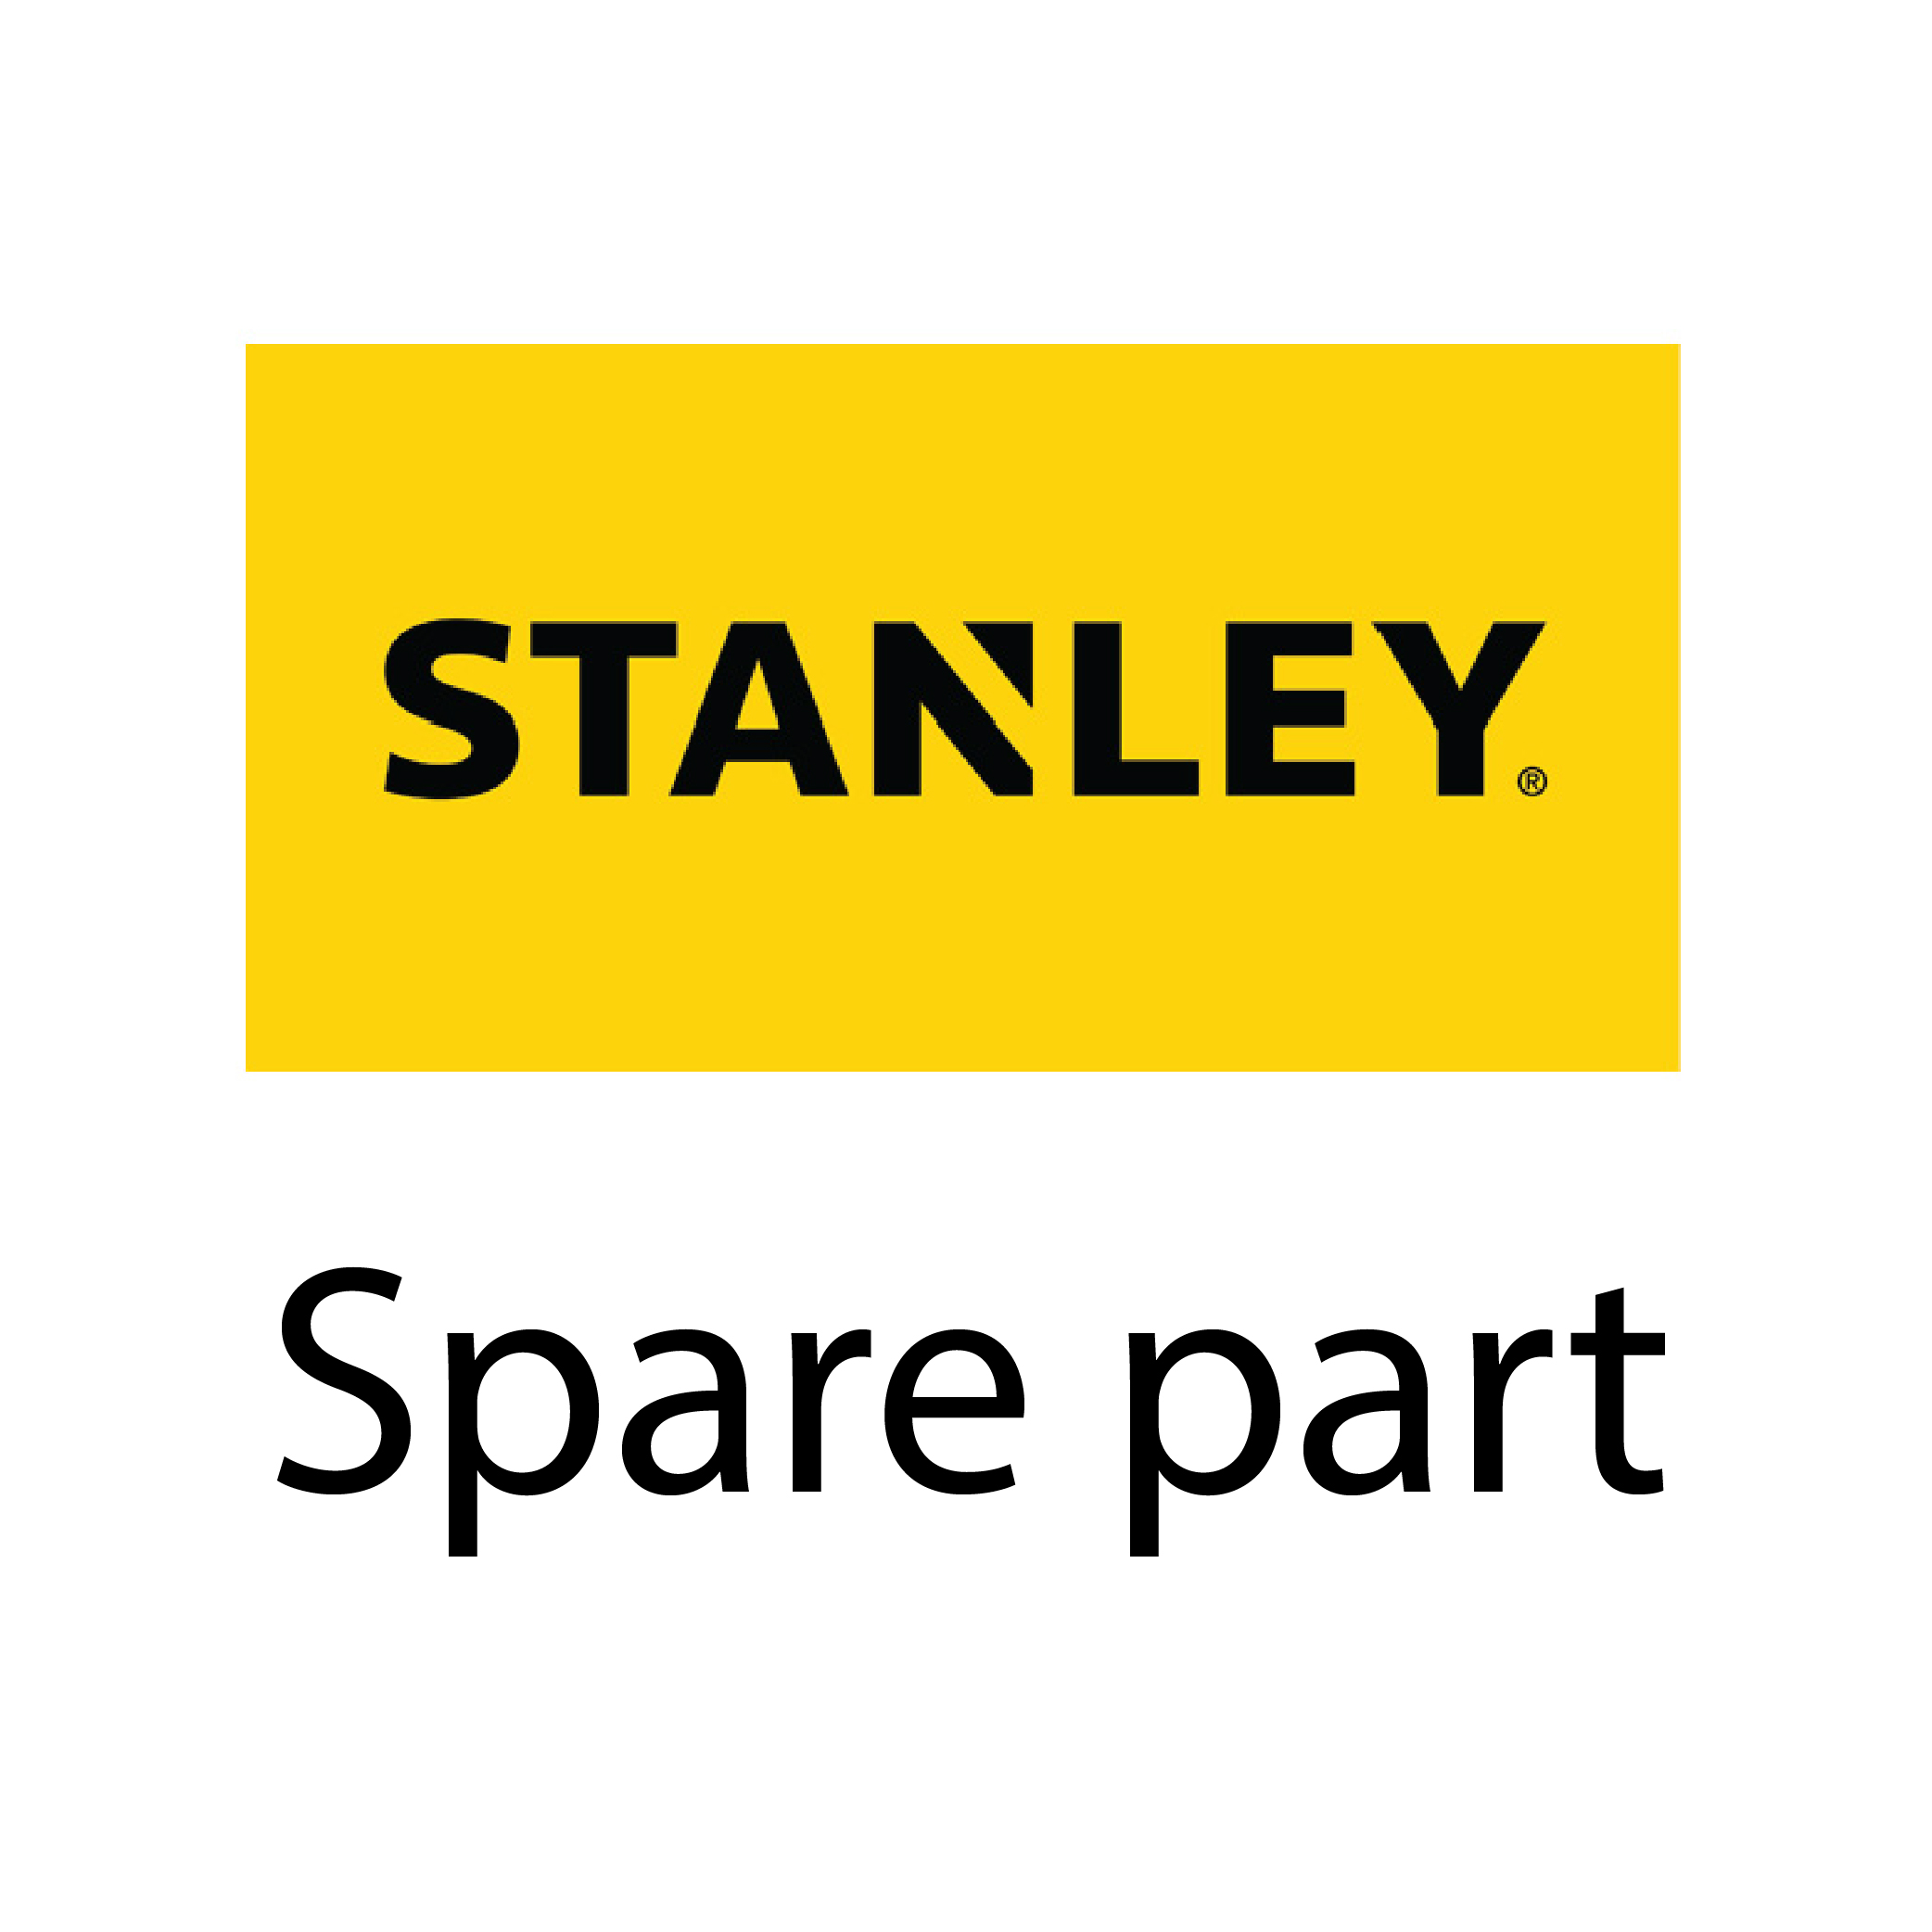 SKI - สกี จำหน่ายสินค้าหลากหลาย และคุณภาพดี | STANLEY #90535257 ทุ่น STEL401